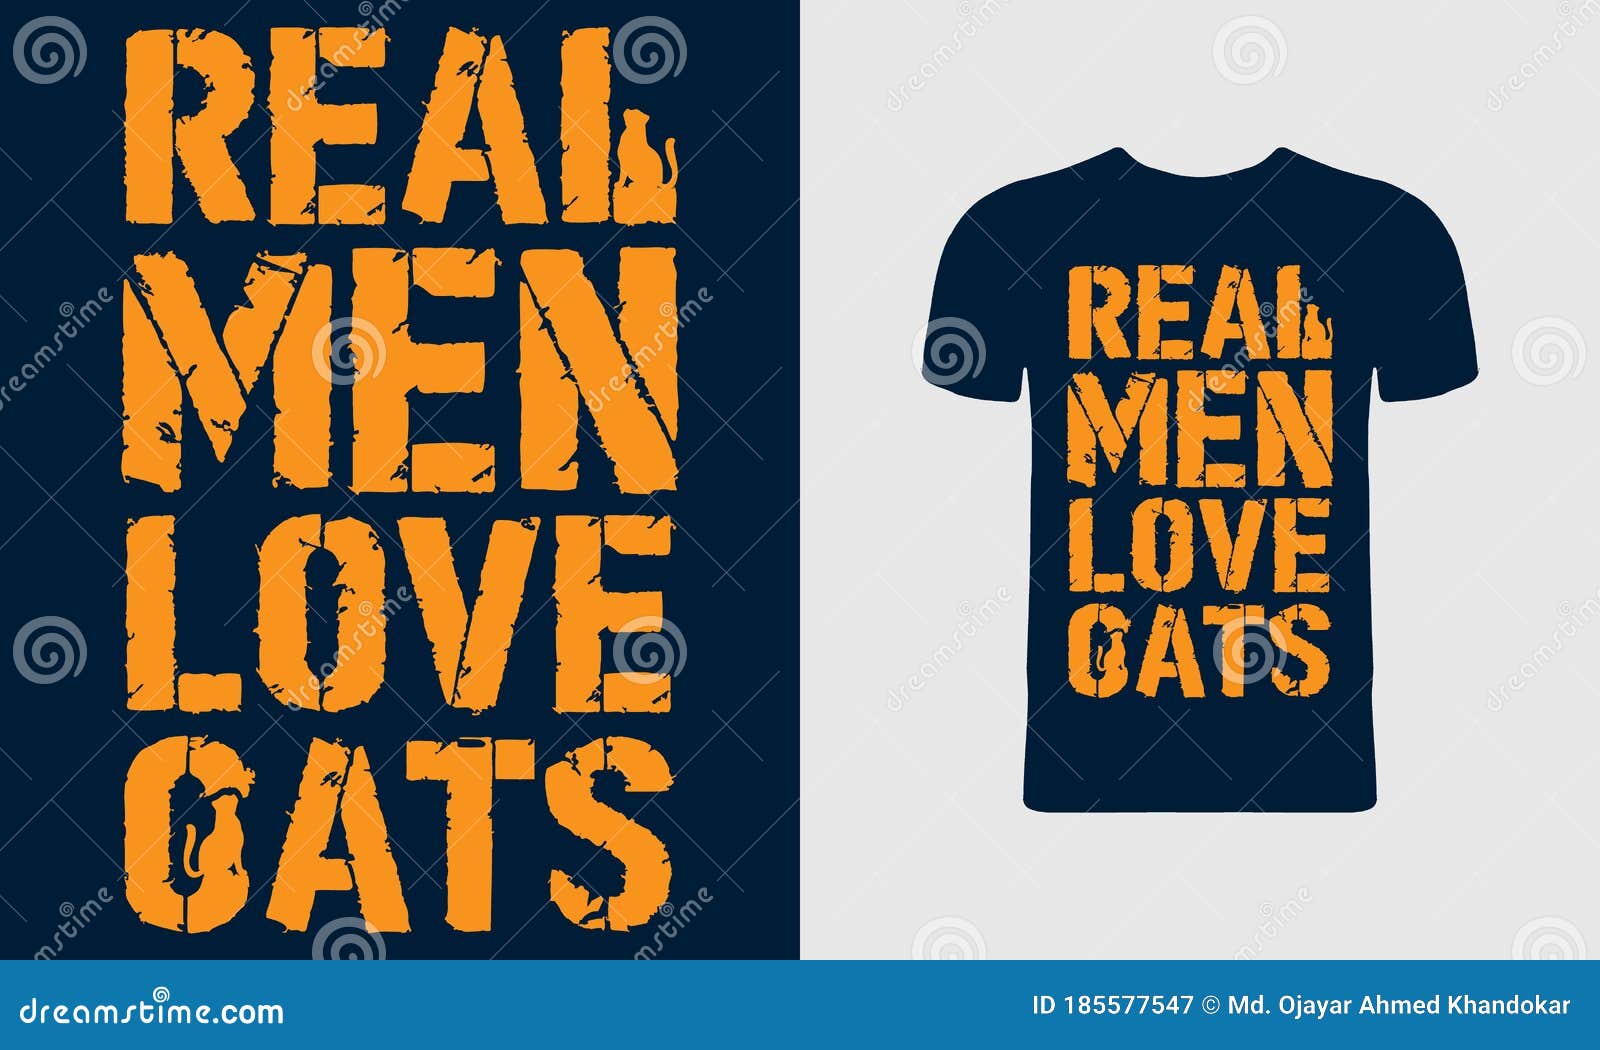 Buy > real men love cats shirt > in stock